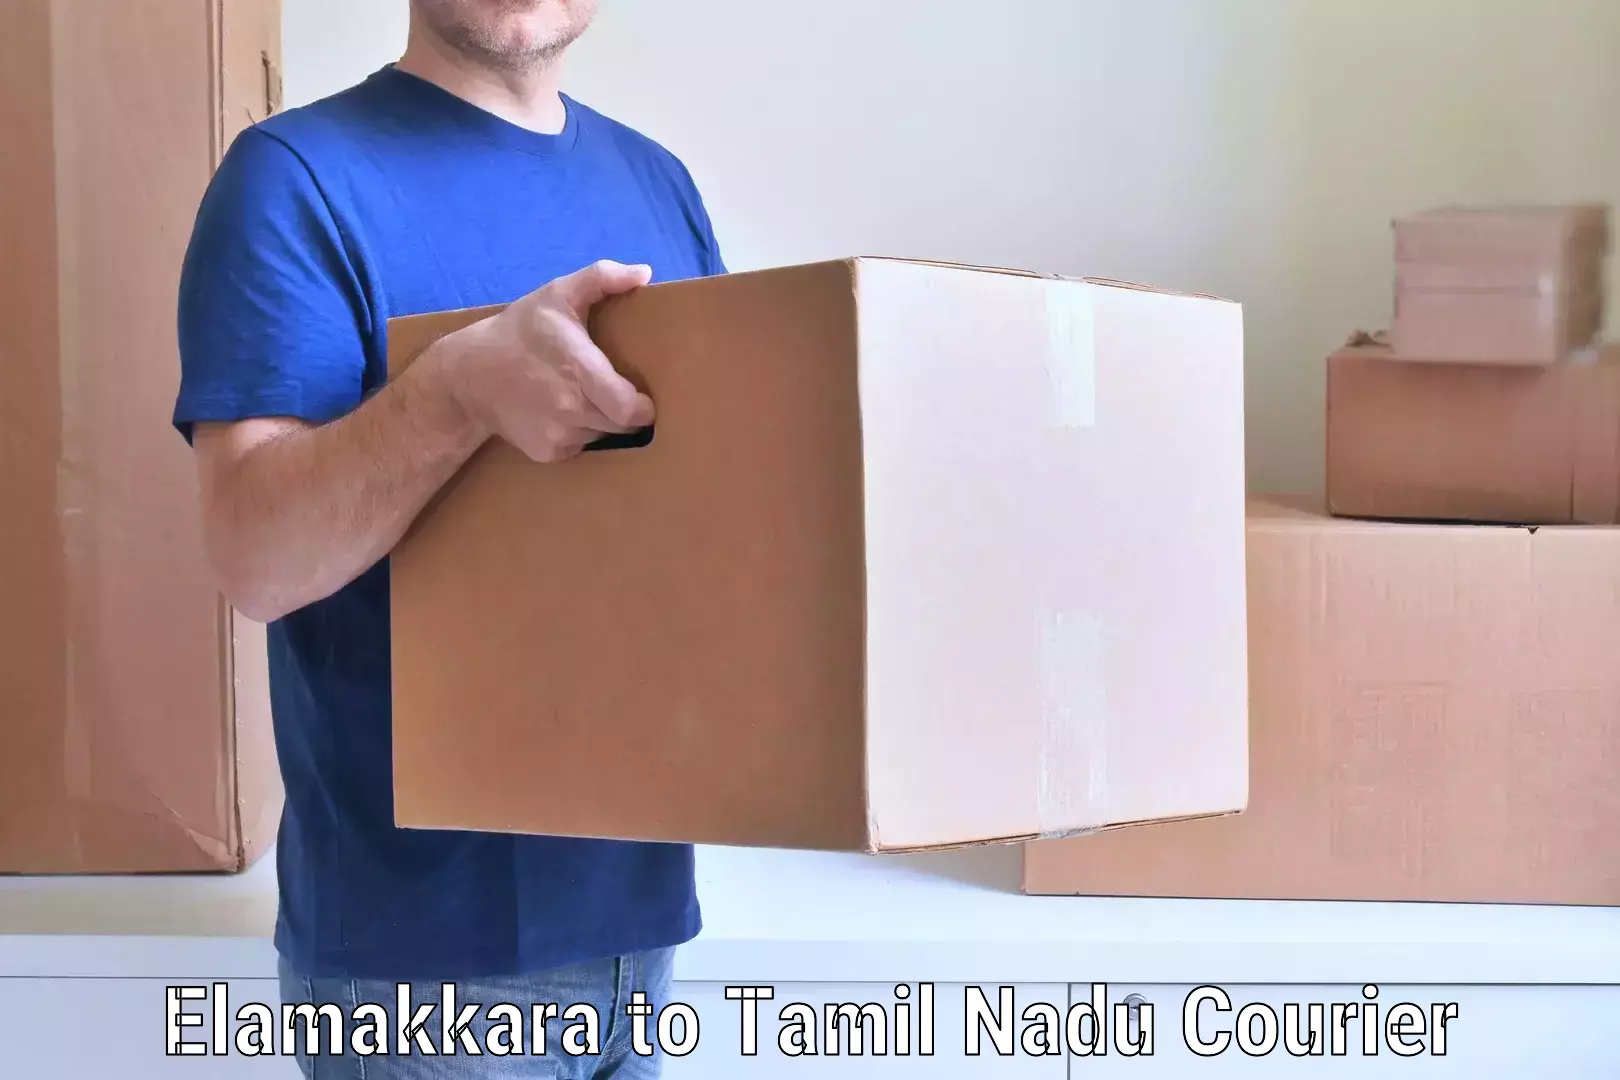 Efficient furniture movers Elamakkara to Tamil Nadu